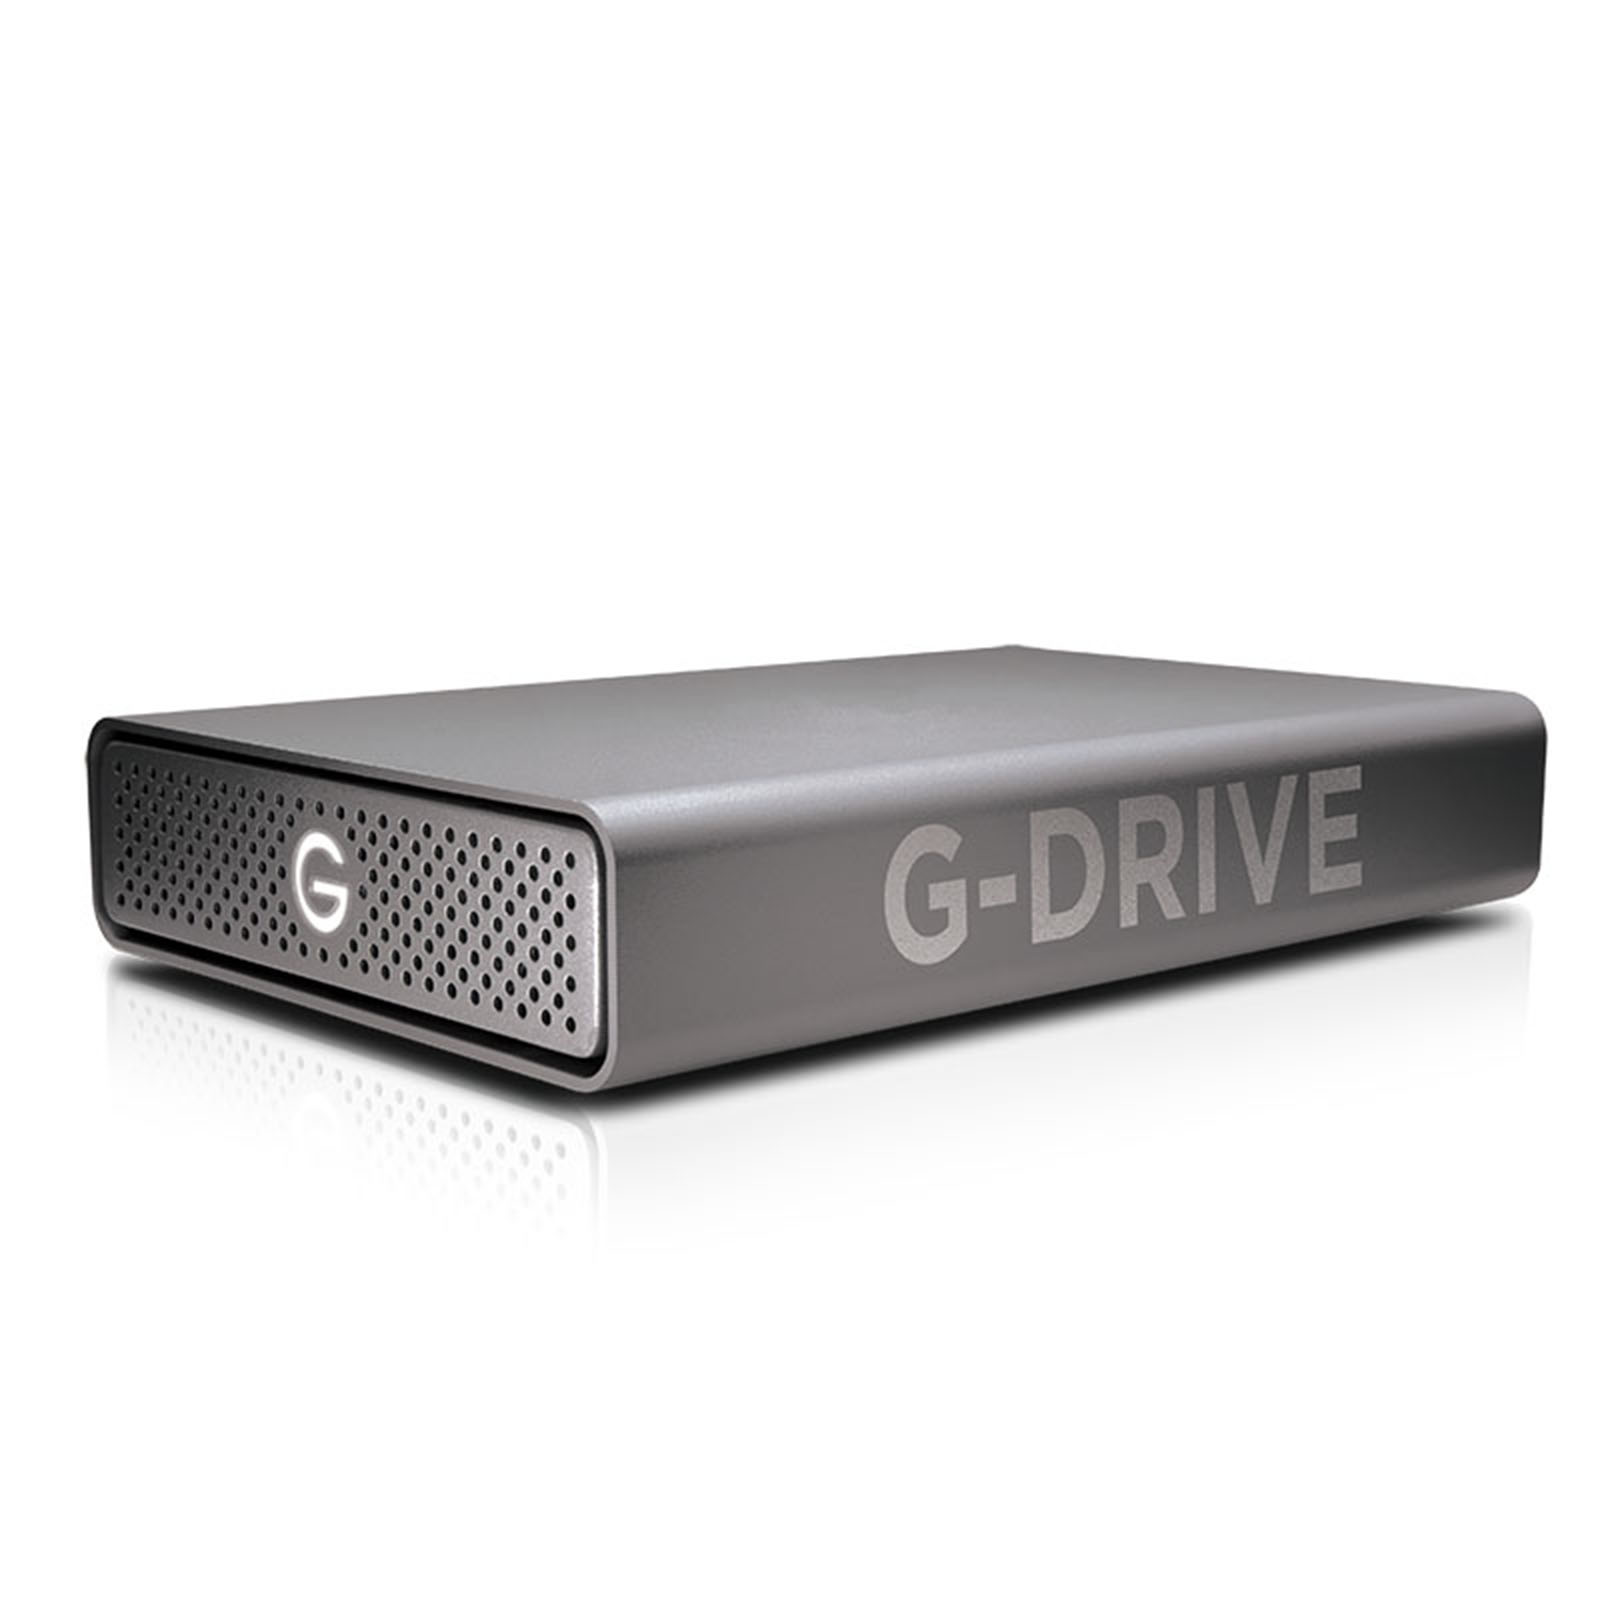 SanDisk Professional 22TB G-DRIVE Desktop Hard Drive | Wex Photo Video